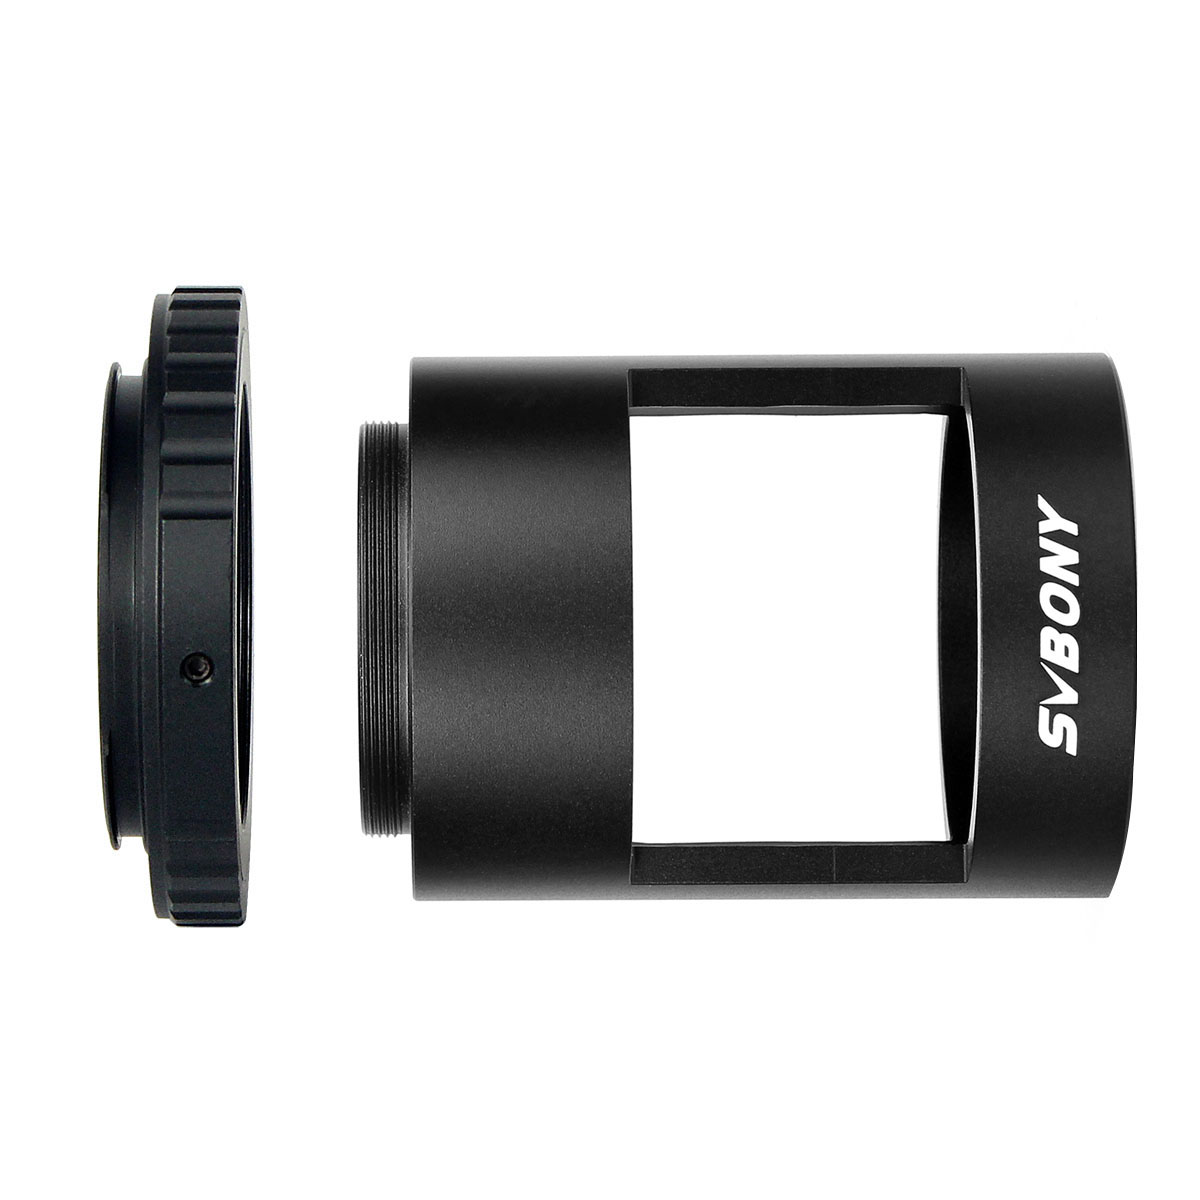 SVBONY-Full-Metal-Spotting-Scope-Camera-Adapter-Fits-Eyepiece-OD-475mm-w-T-Ring-1817318-5